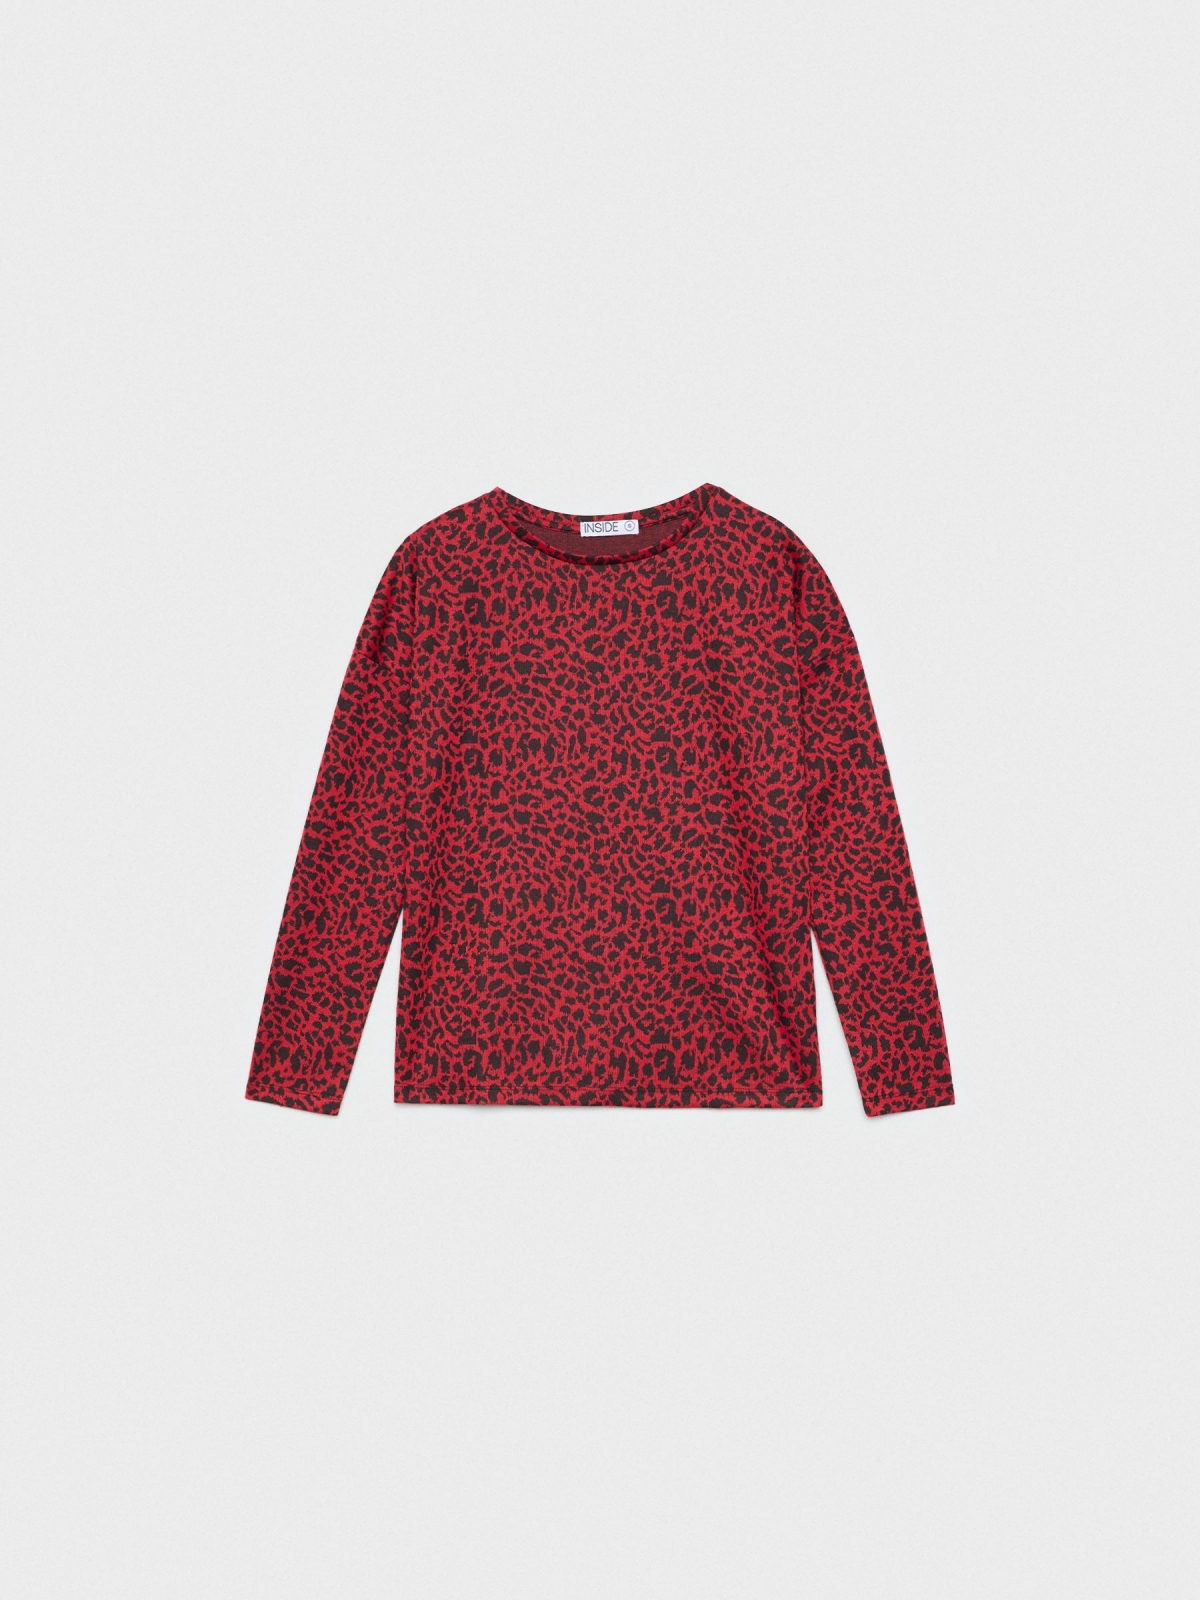  Camiseta animal print leopardo rojo